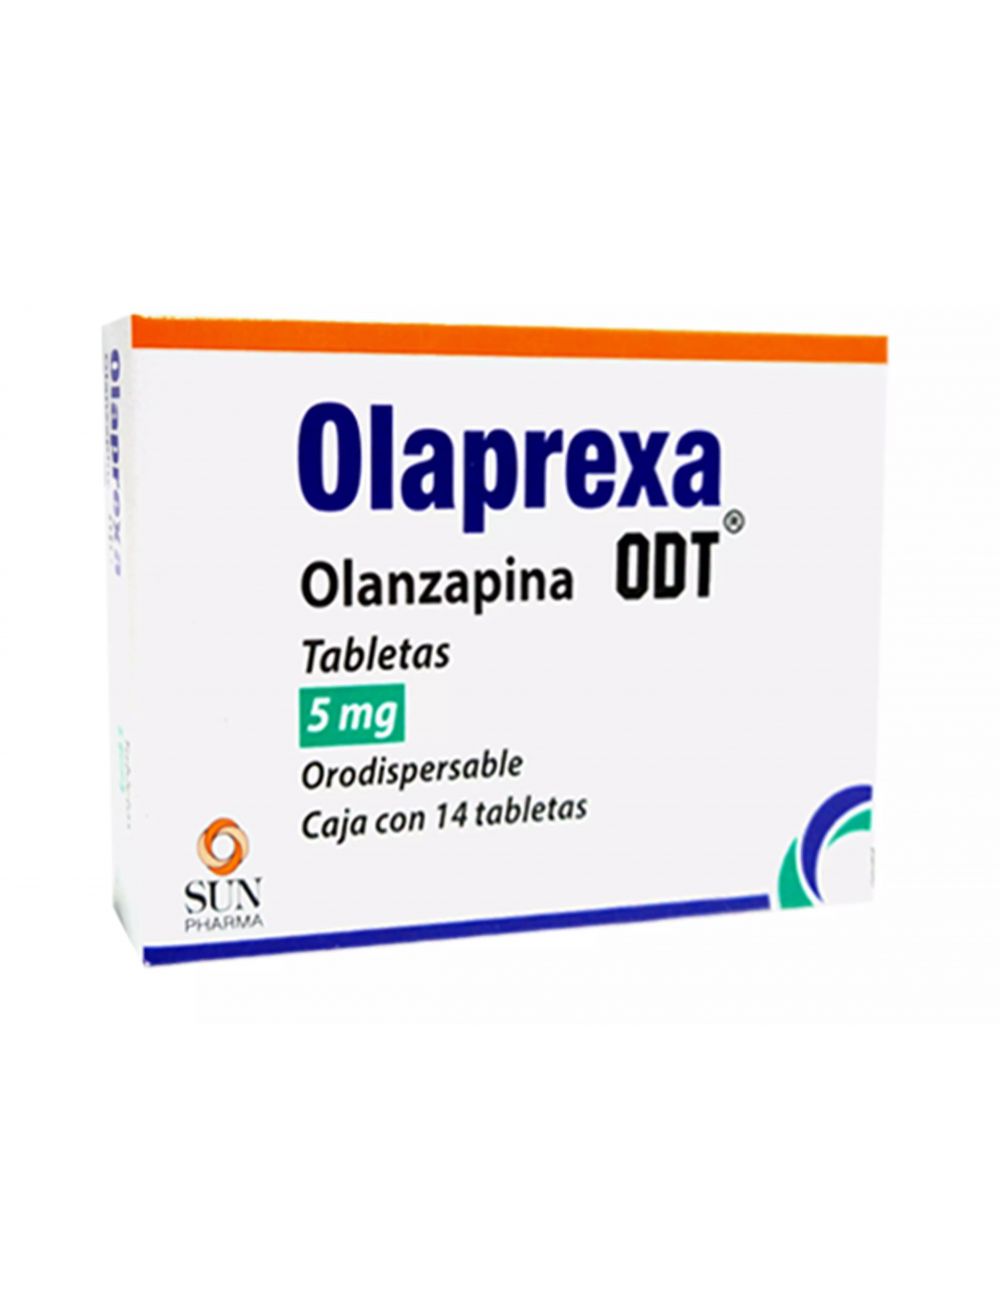 Olaprexa Odt 5 mg Caja Con 14 Tabletas